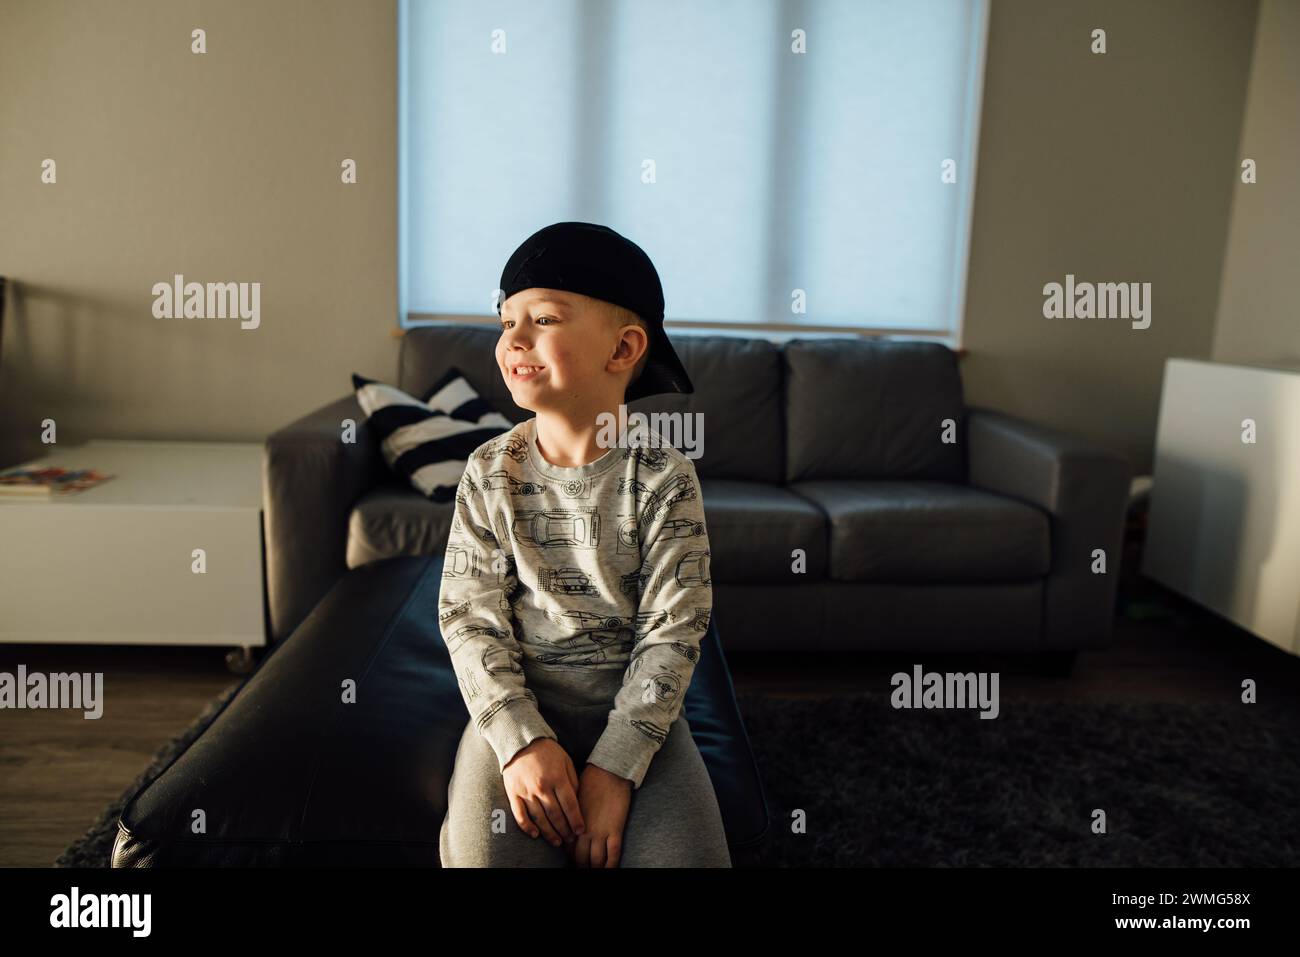 Profile of young boy wearing backwards baseball cap and smiling Stock Photo